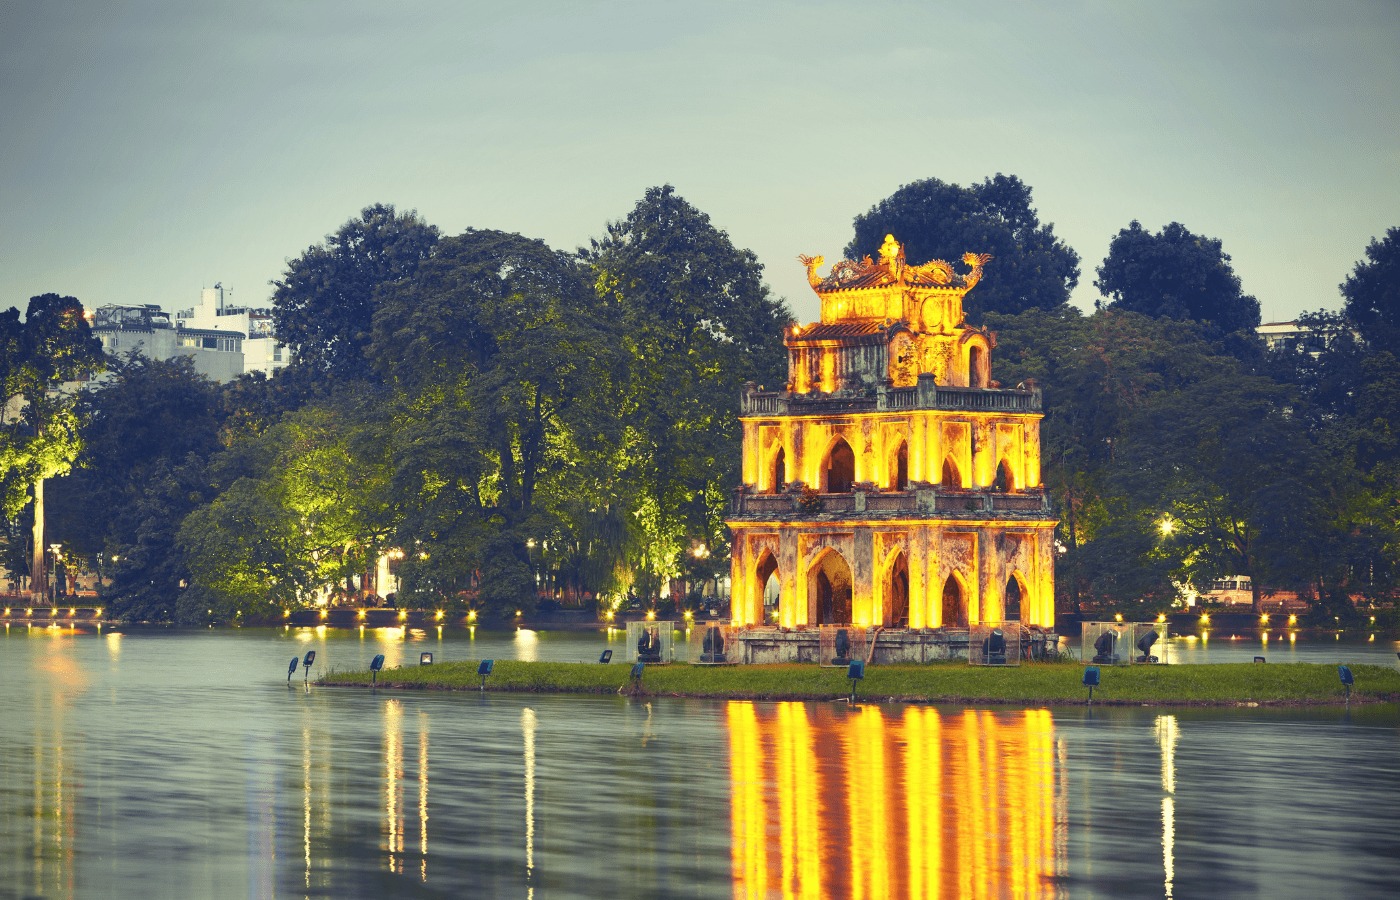 Best Time To Visit Vietnam By Region - North Vietnam (Hanoi, Halong Bay, Cuc Phuong, Mai Chau & Ninh Binh)